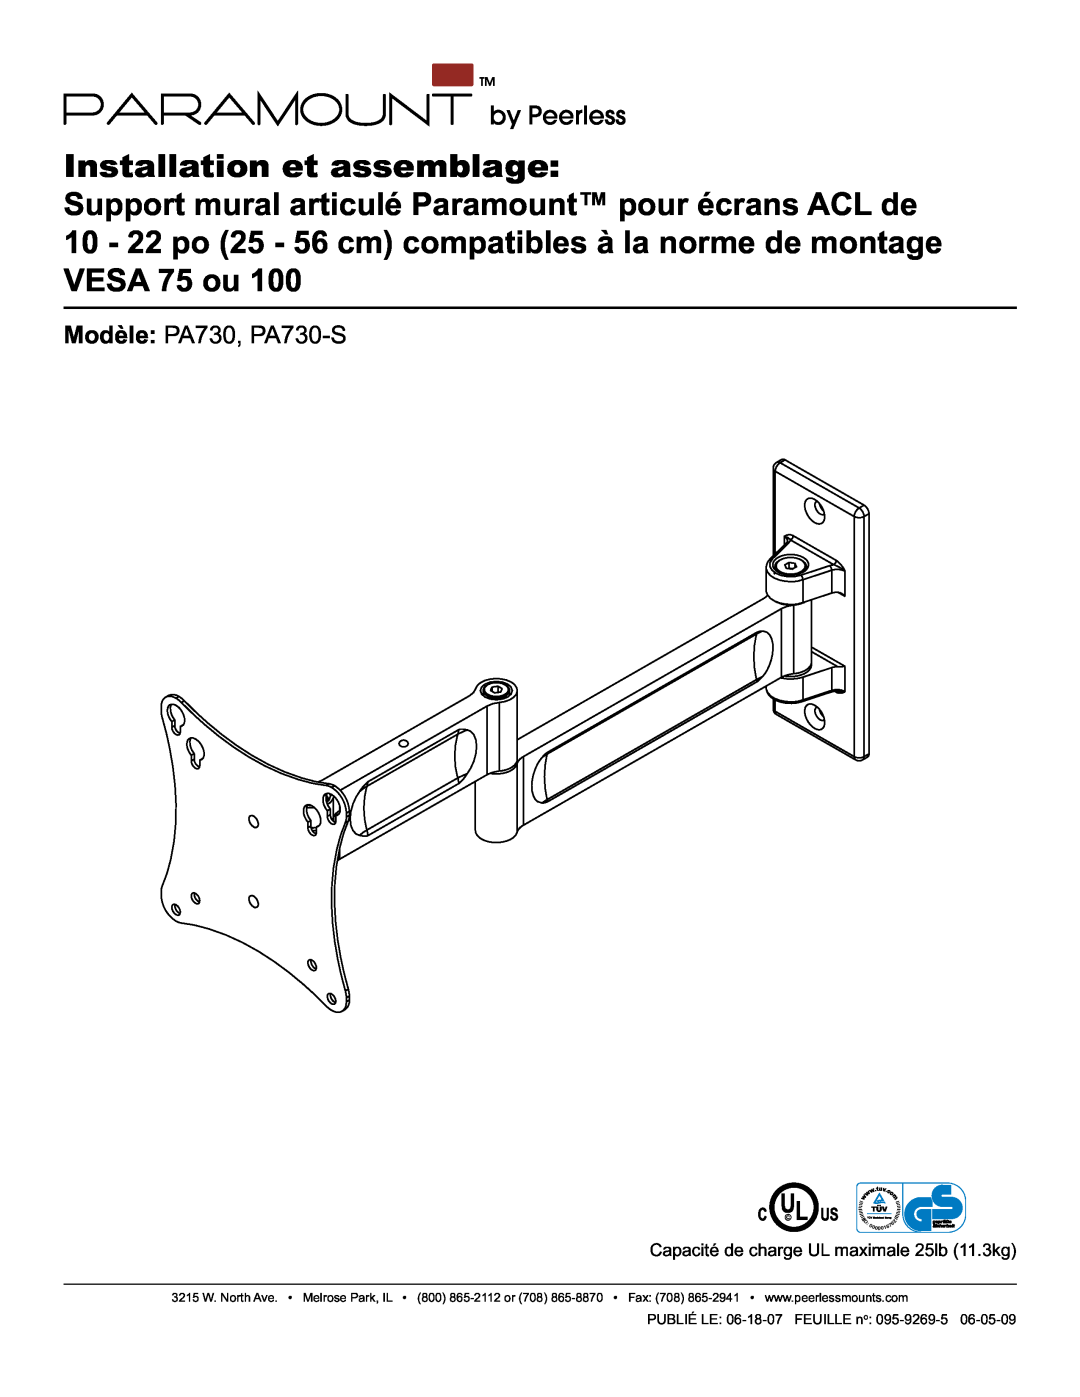 Peerless Industries manual Installation et assemblage, Modèle PA730, PA730-S, C U L Us, 0018 